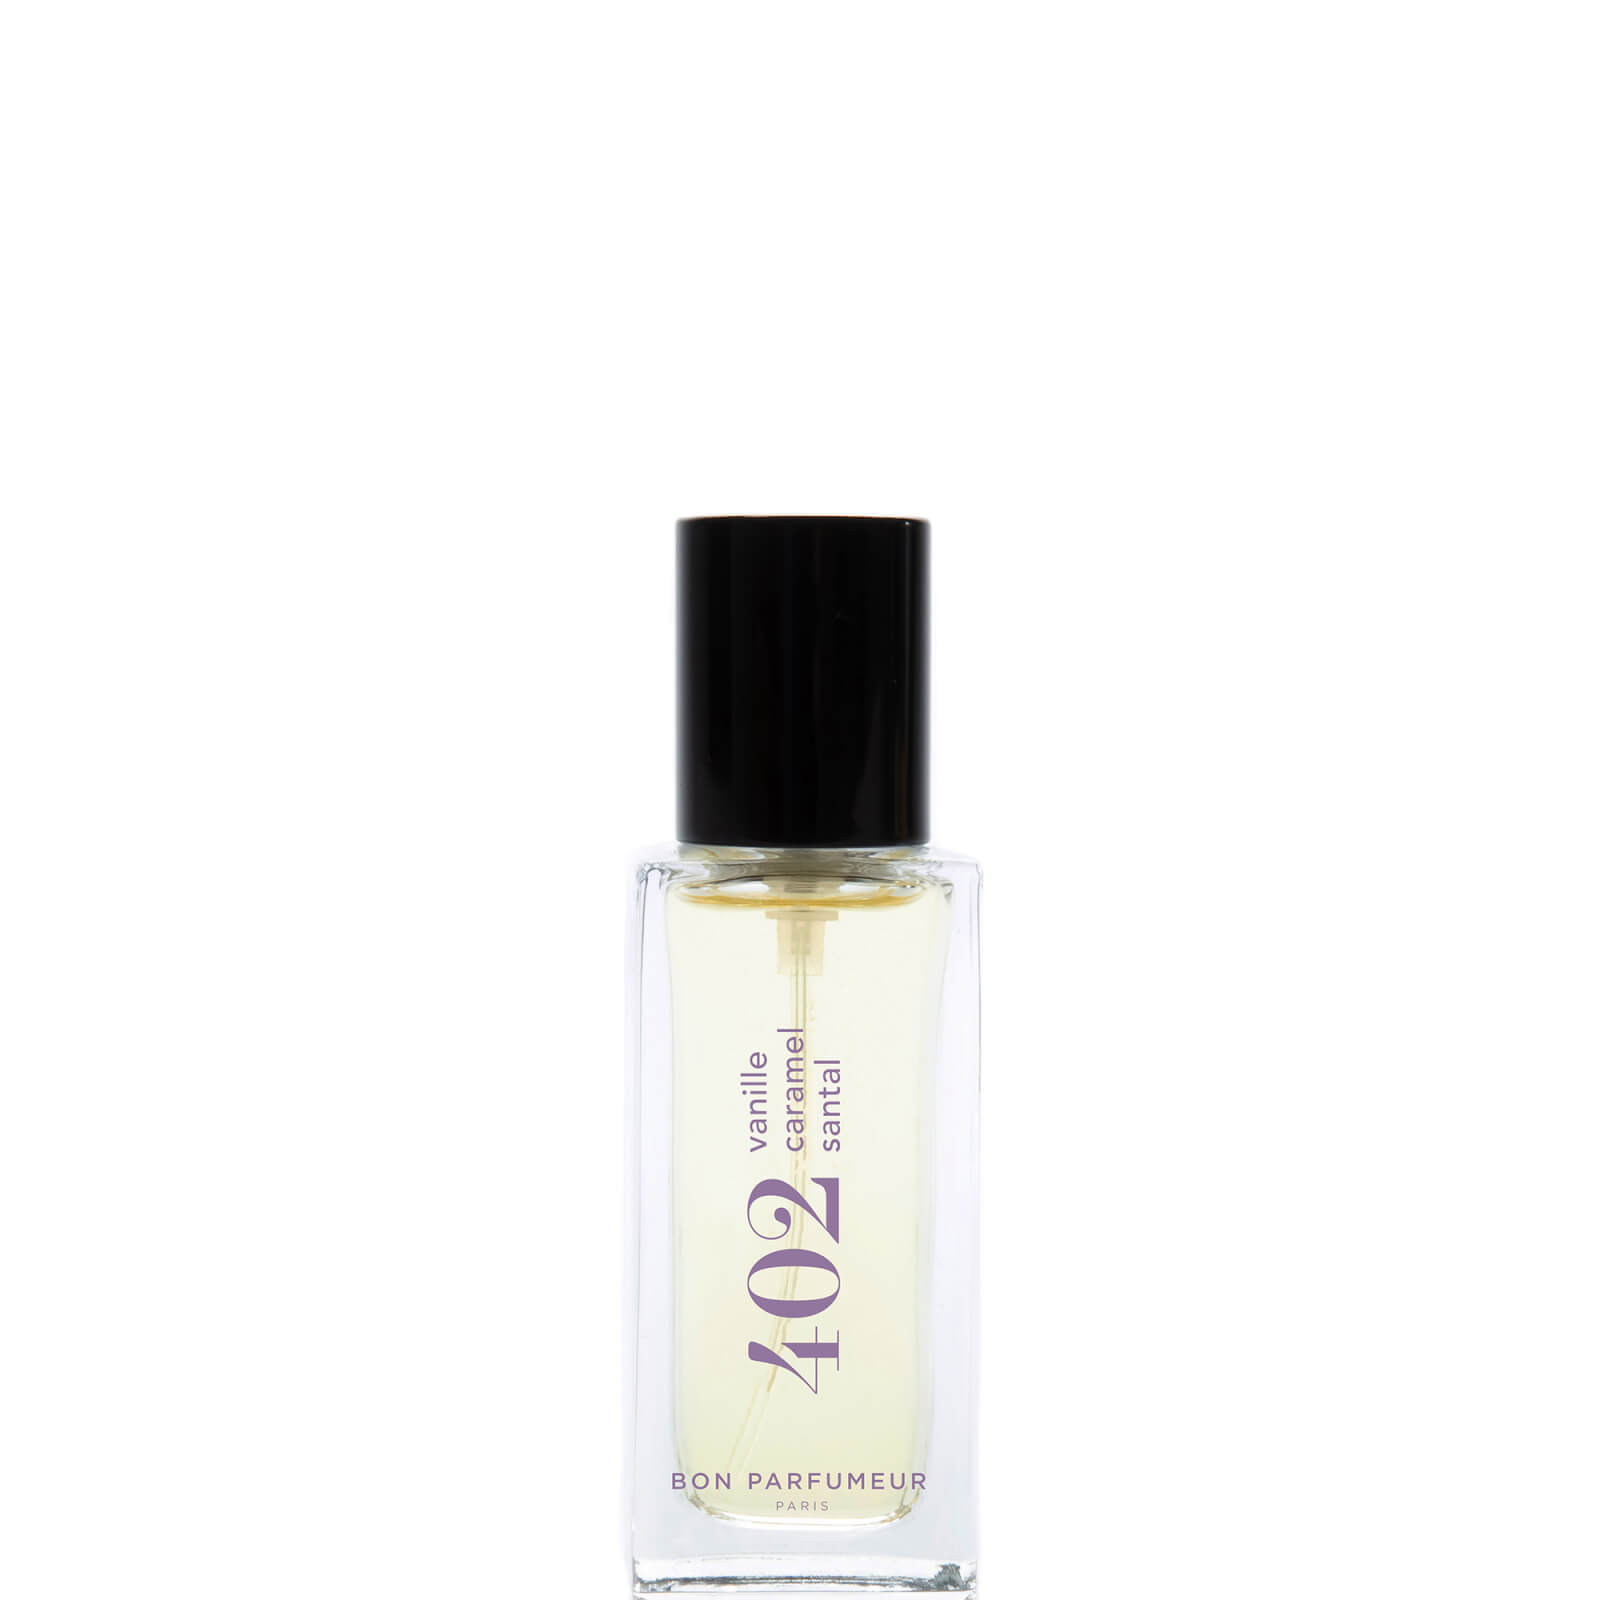 Image of Bon Parfumeur 402 Vaniglia Toffee Sandalwood Eau de Parfum Profumo - 15ml